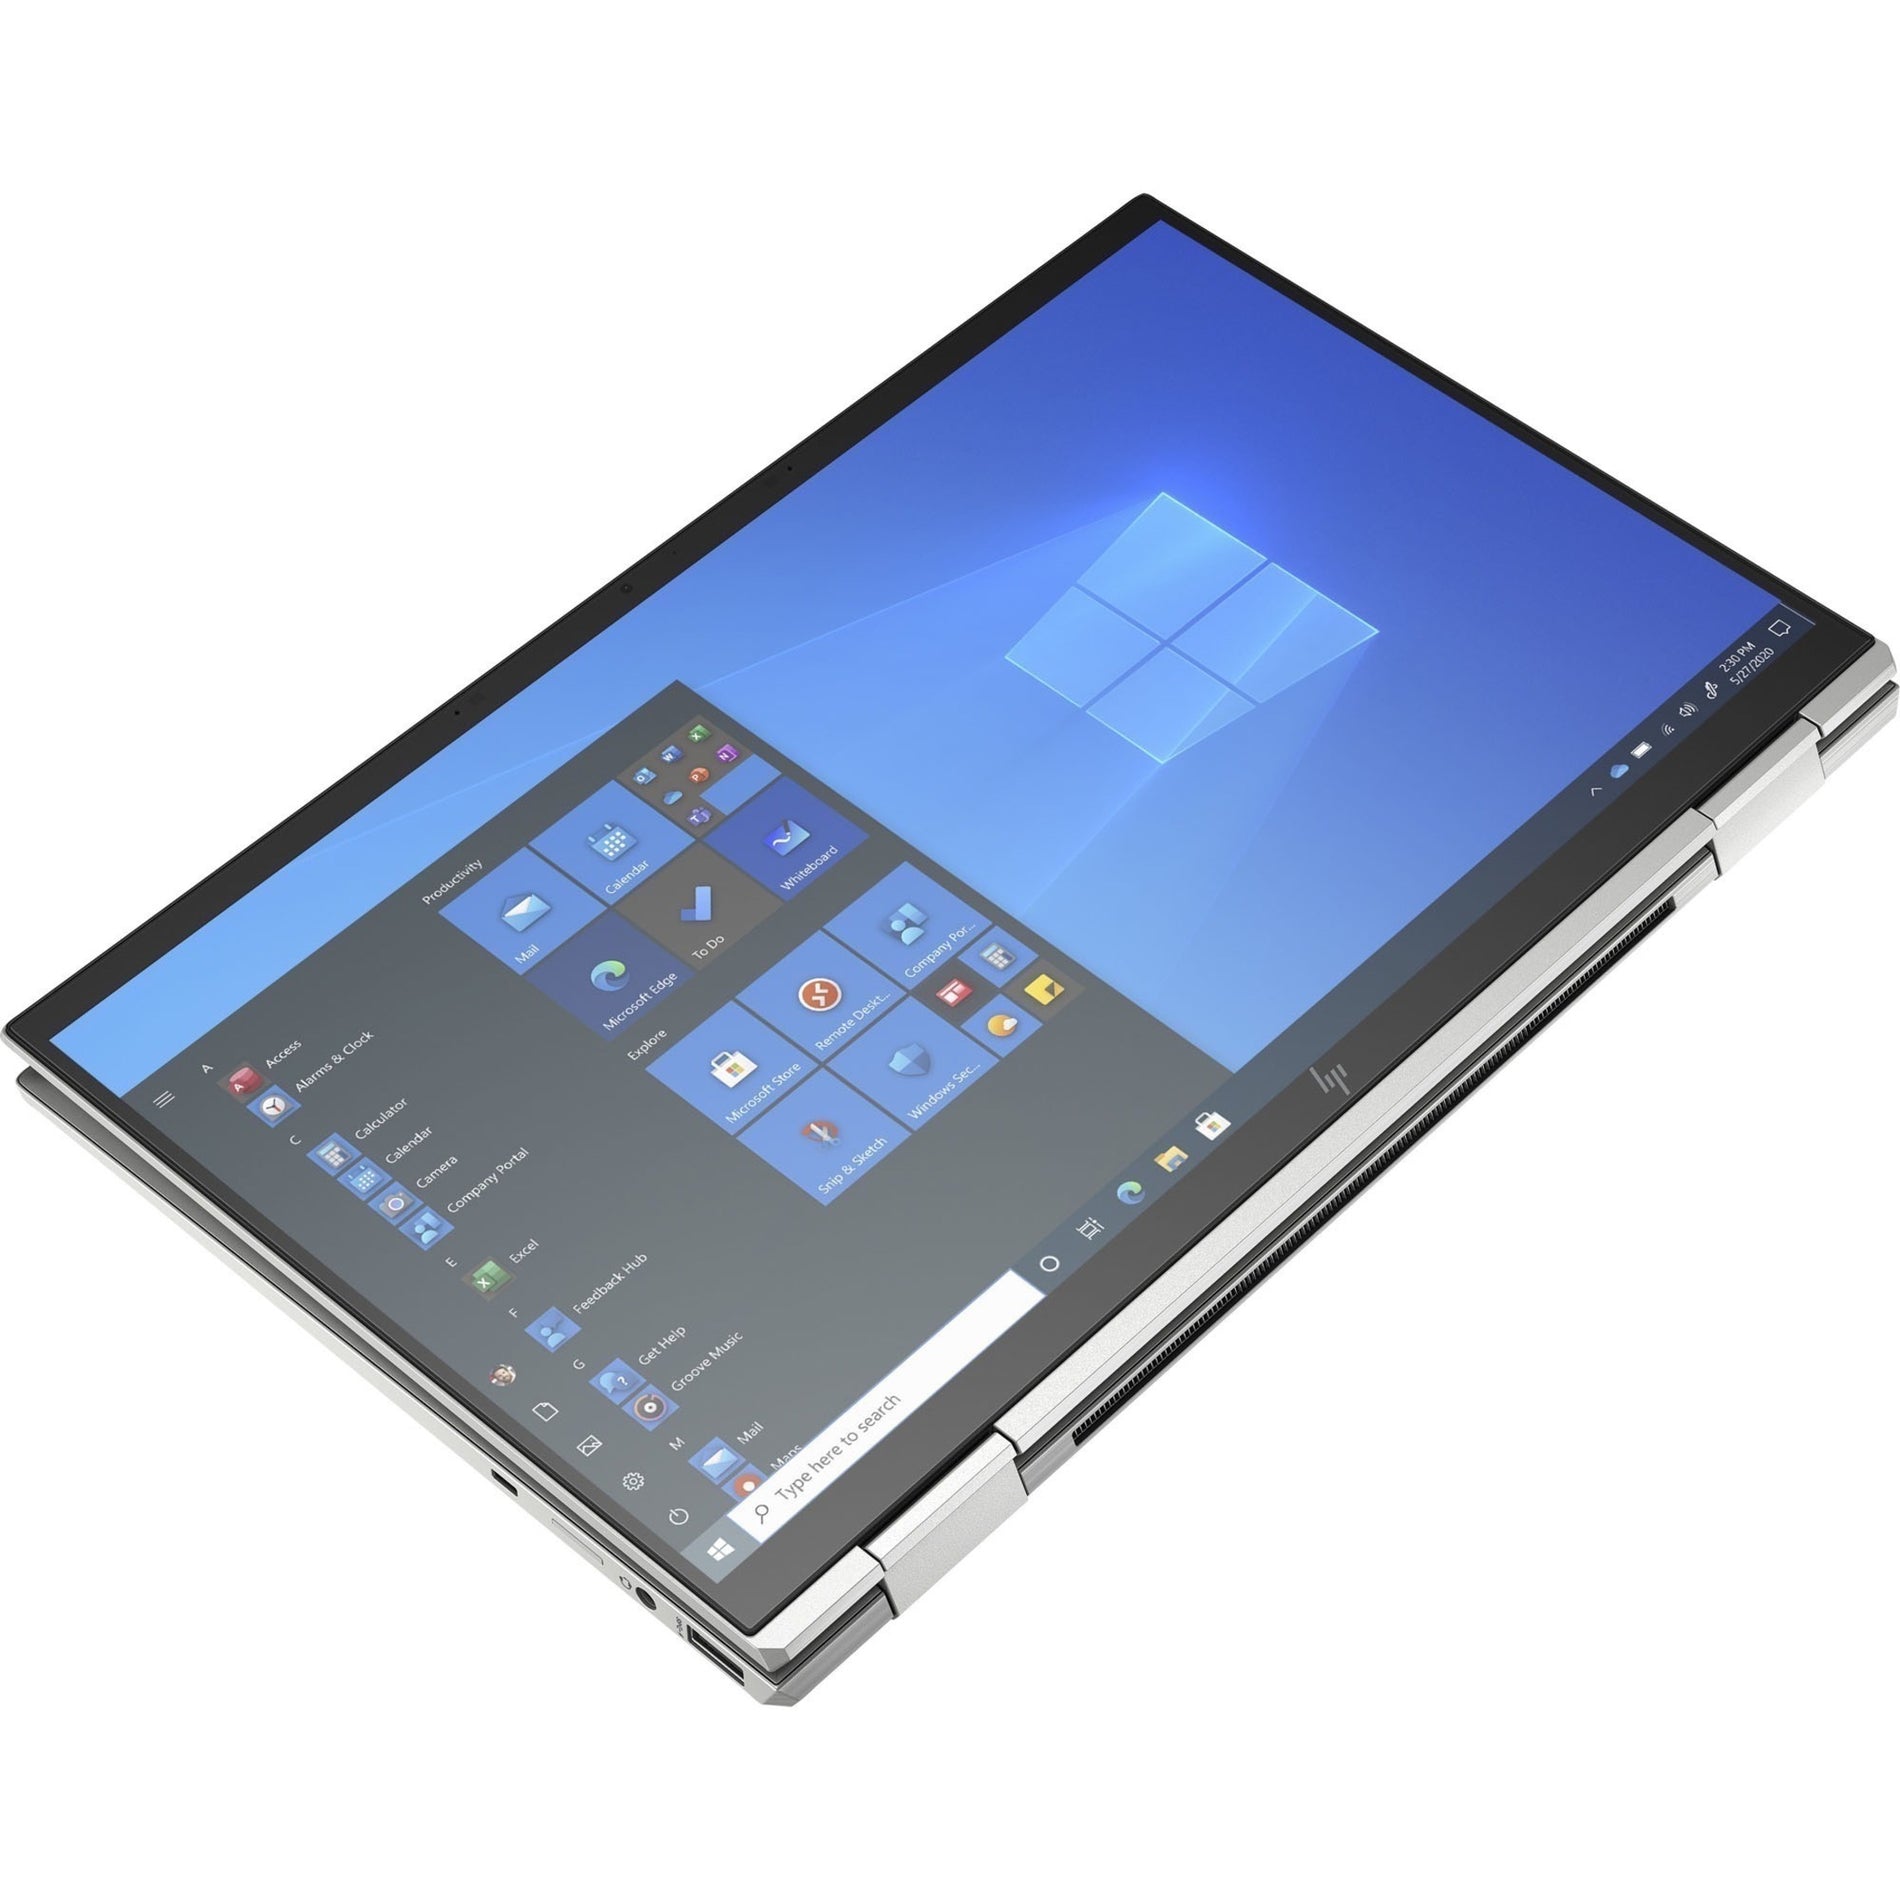 HP EliteBook x360 1040 G8 14" Touchscreen Convertible 2 in 1 Notebook, Intel Core i7, 16GB RAM, 512GB SSD, Windows 10 Pro